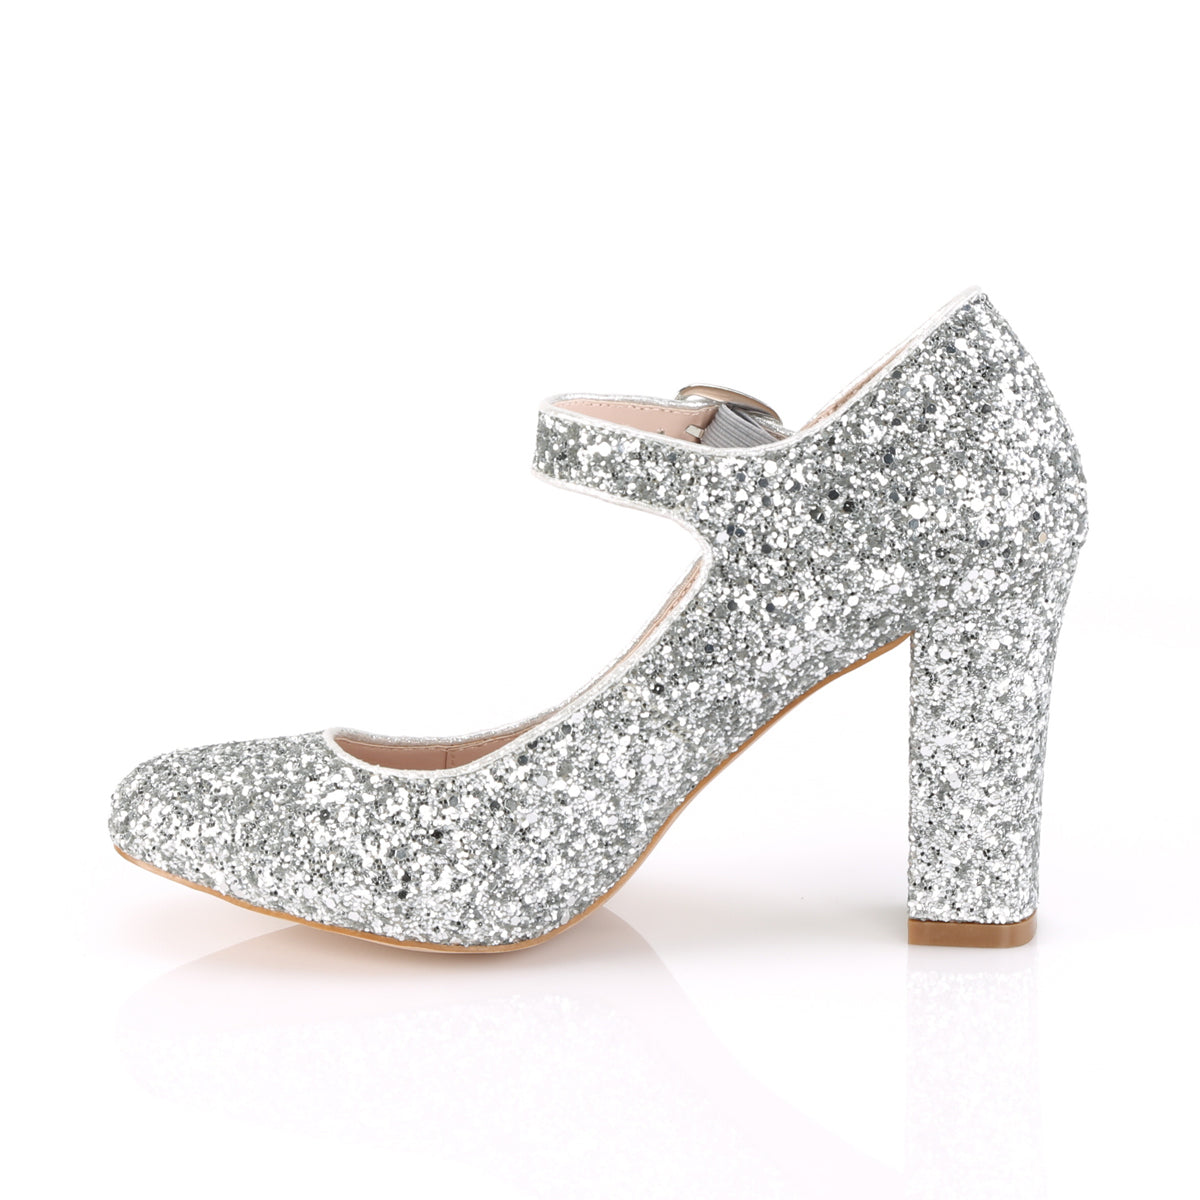 SABRINA-07 Exotic Dancing Fabulicious Shoes Silver Glitter